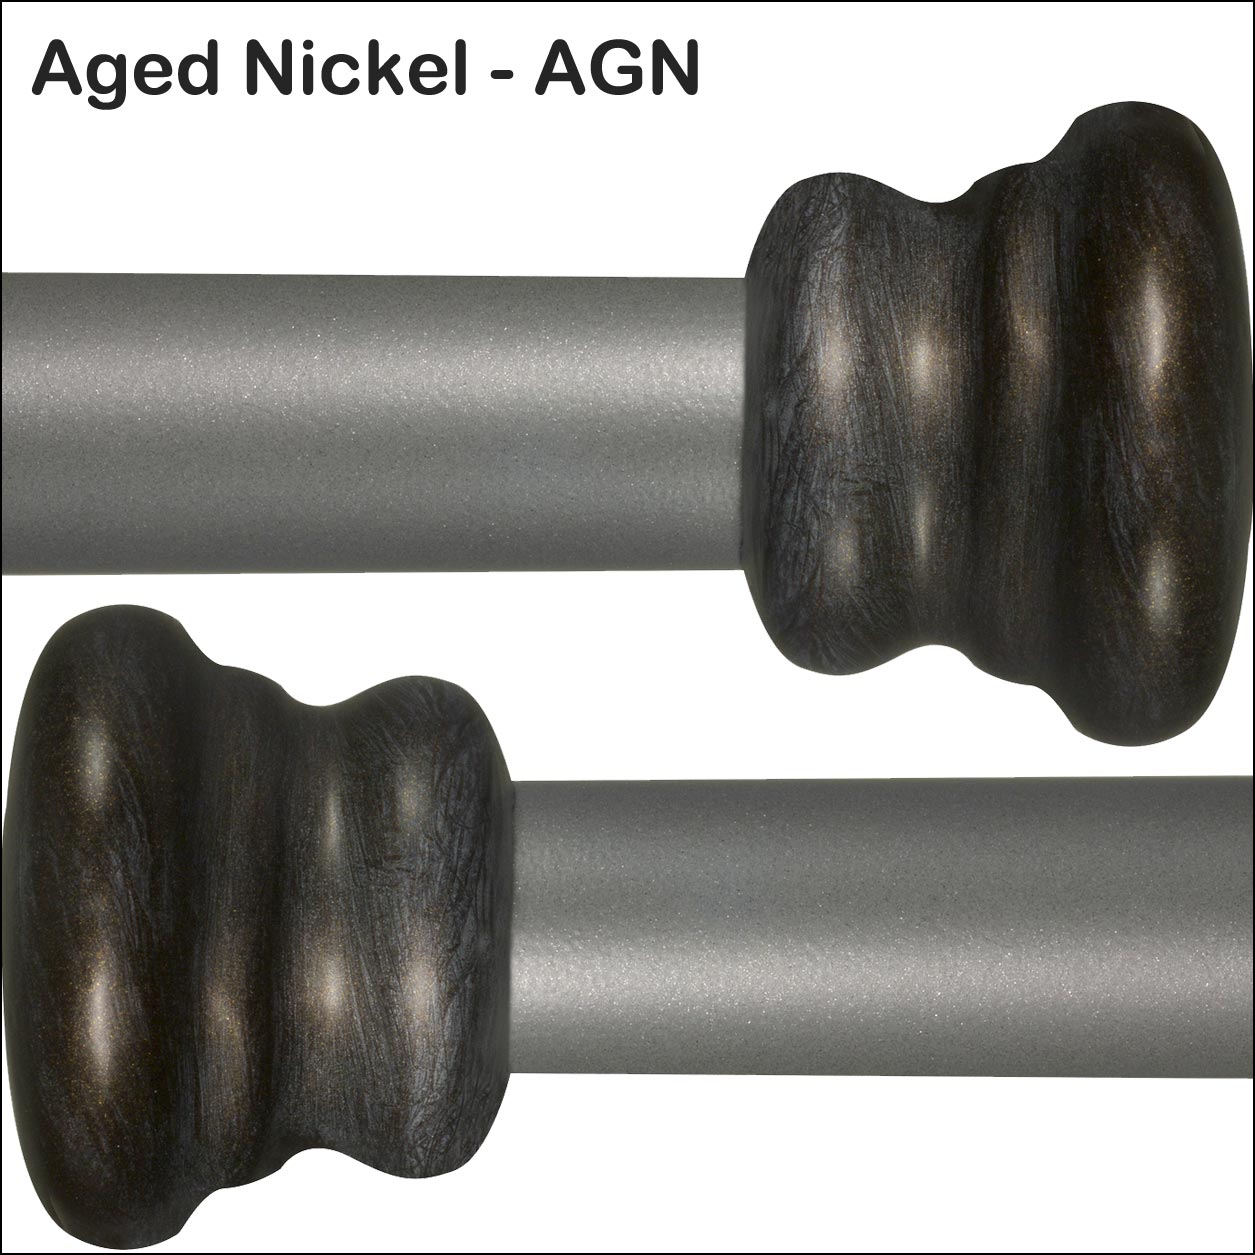 Aged Nickel AGN Powder Coating Finish Wesley Allen Matriae